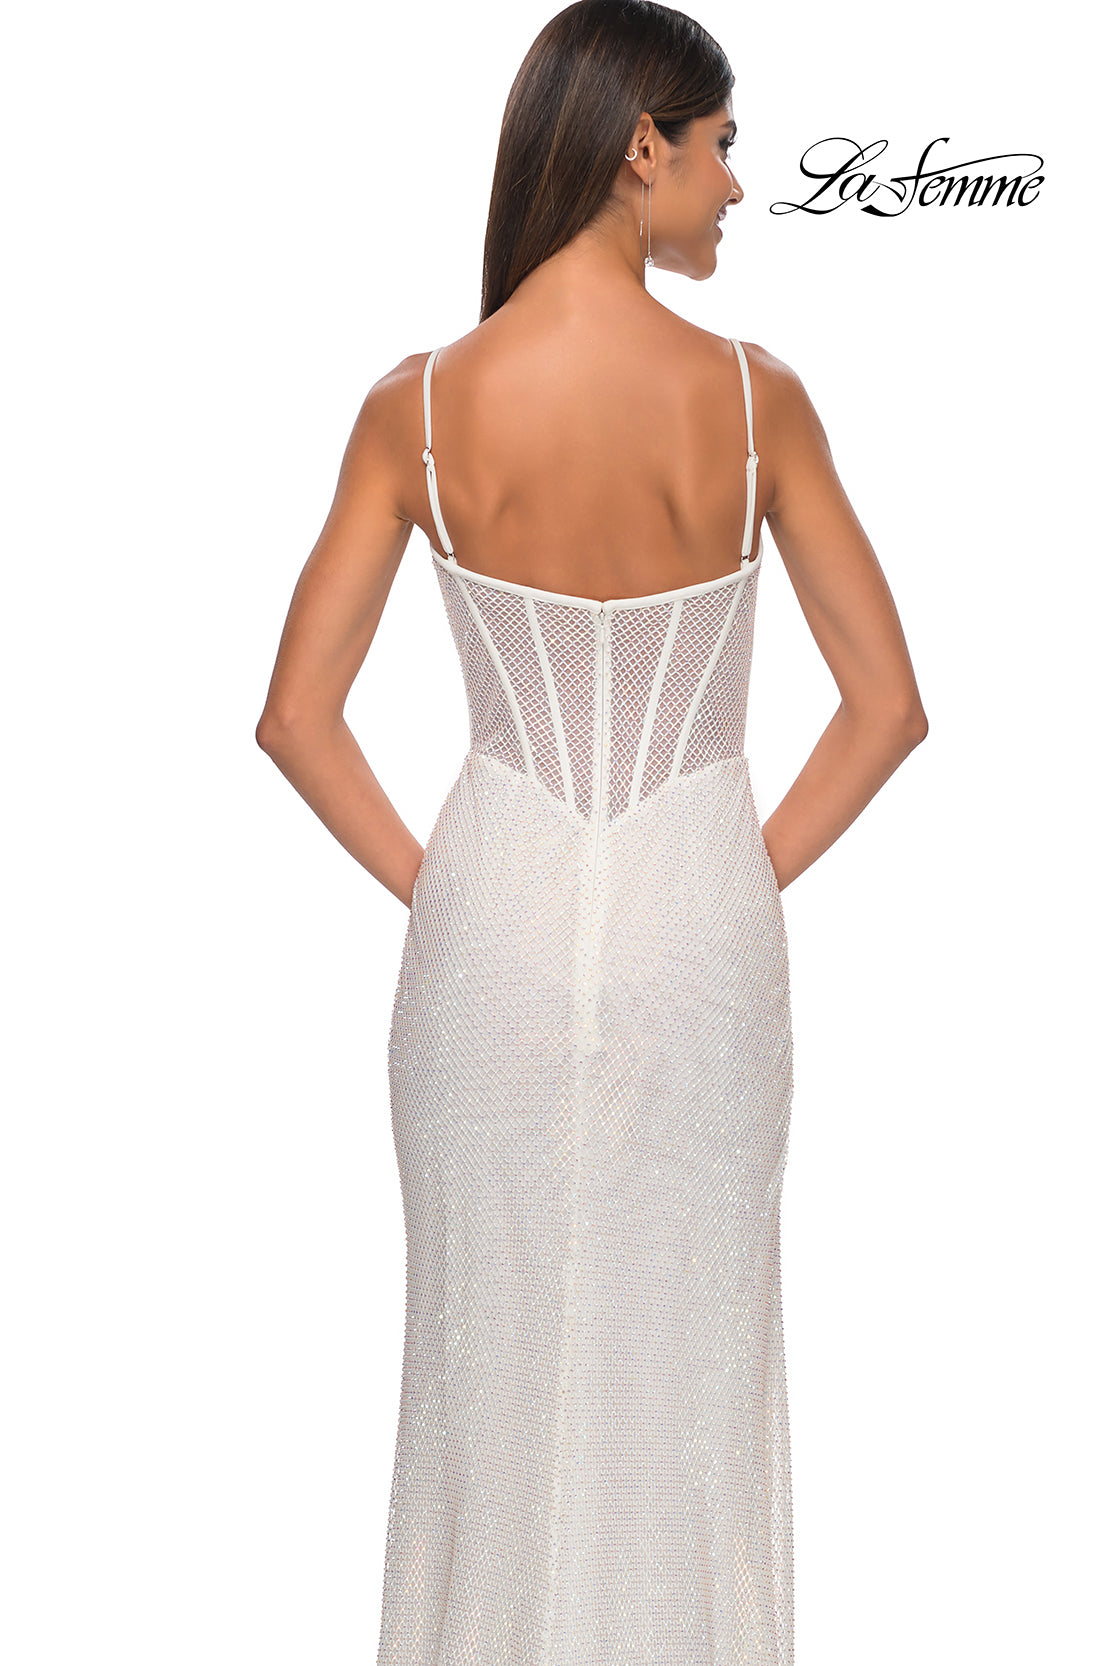 La Femme 32285 V-Neck Neckline Zipper Back Corset Hot Stone/Fishnet Column Fitted Evening Dress